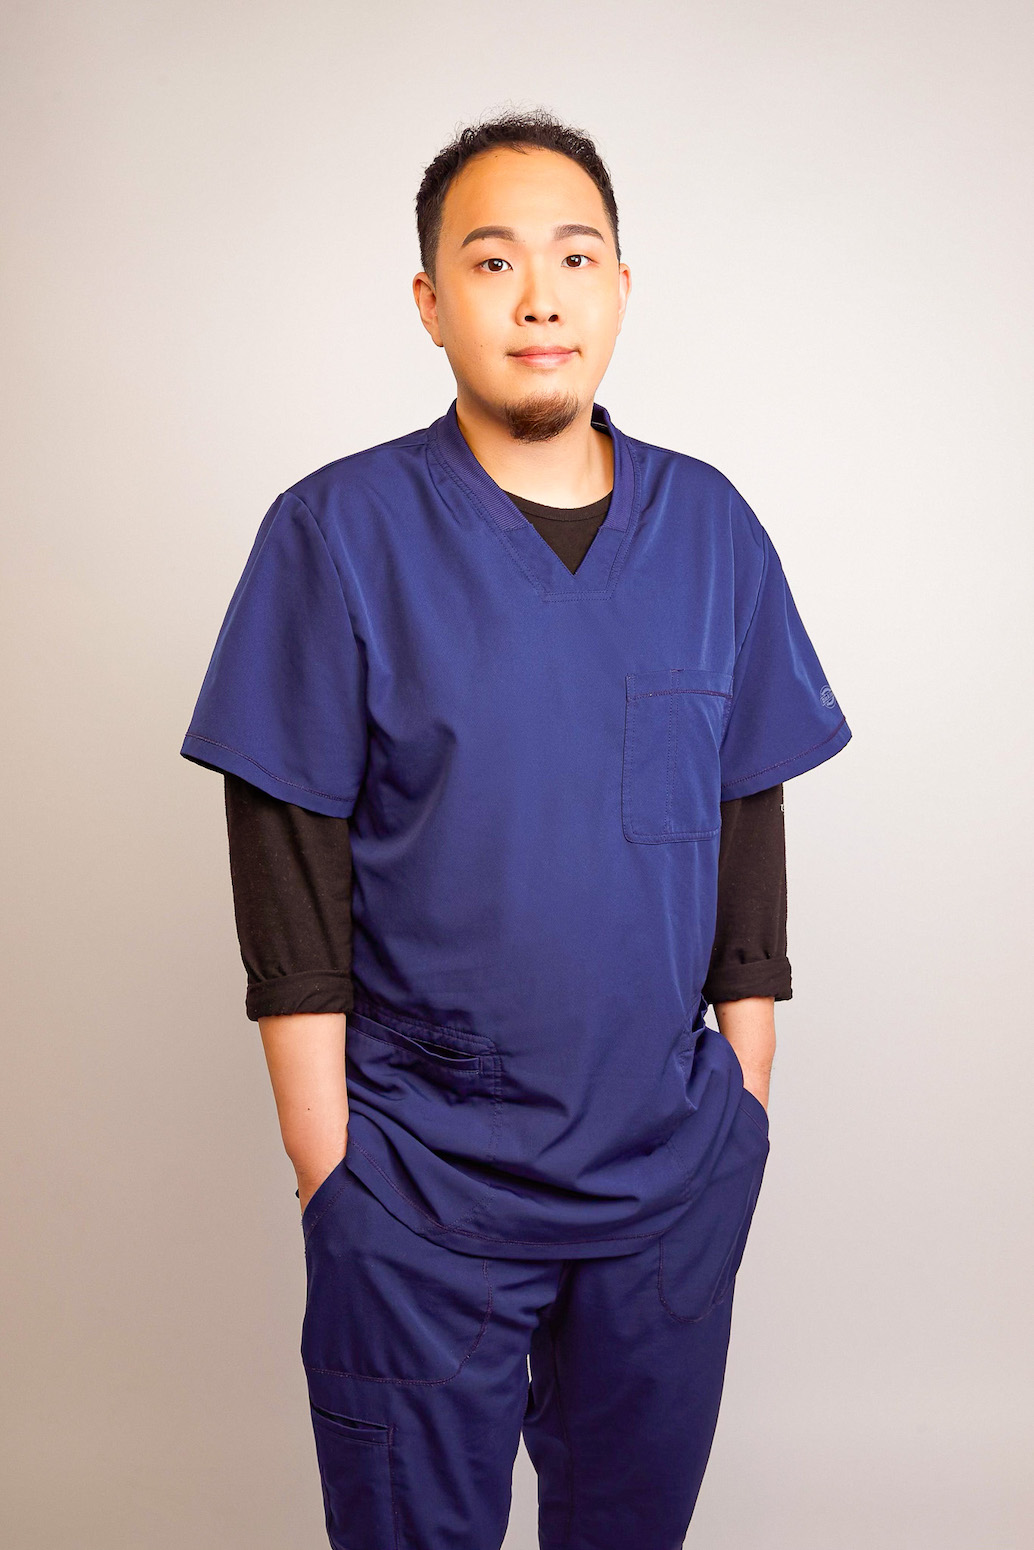 Acupuncturist standing facing camera in blue scrubs.